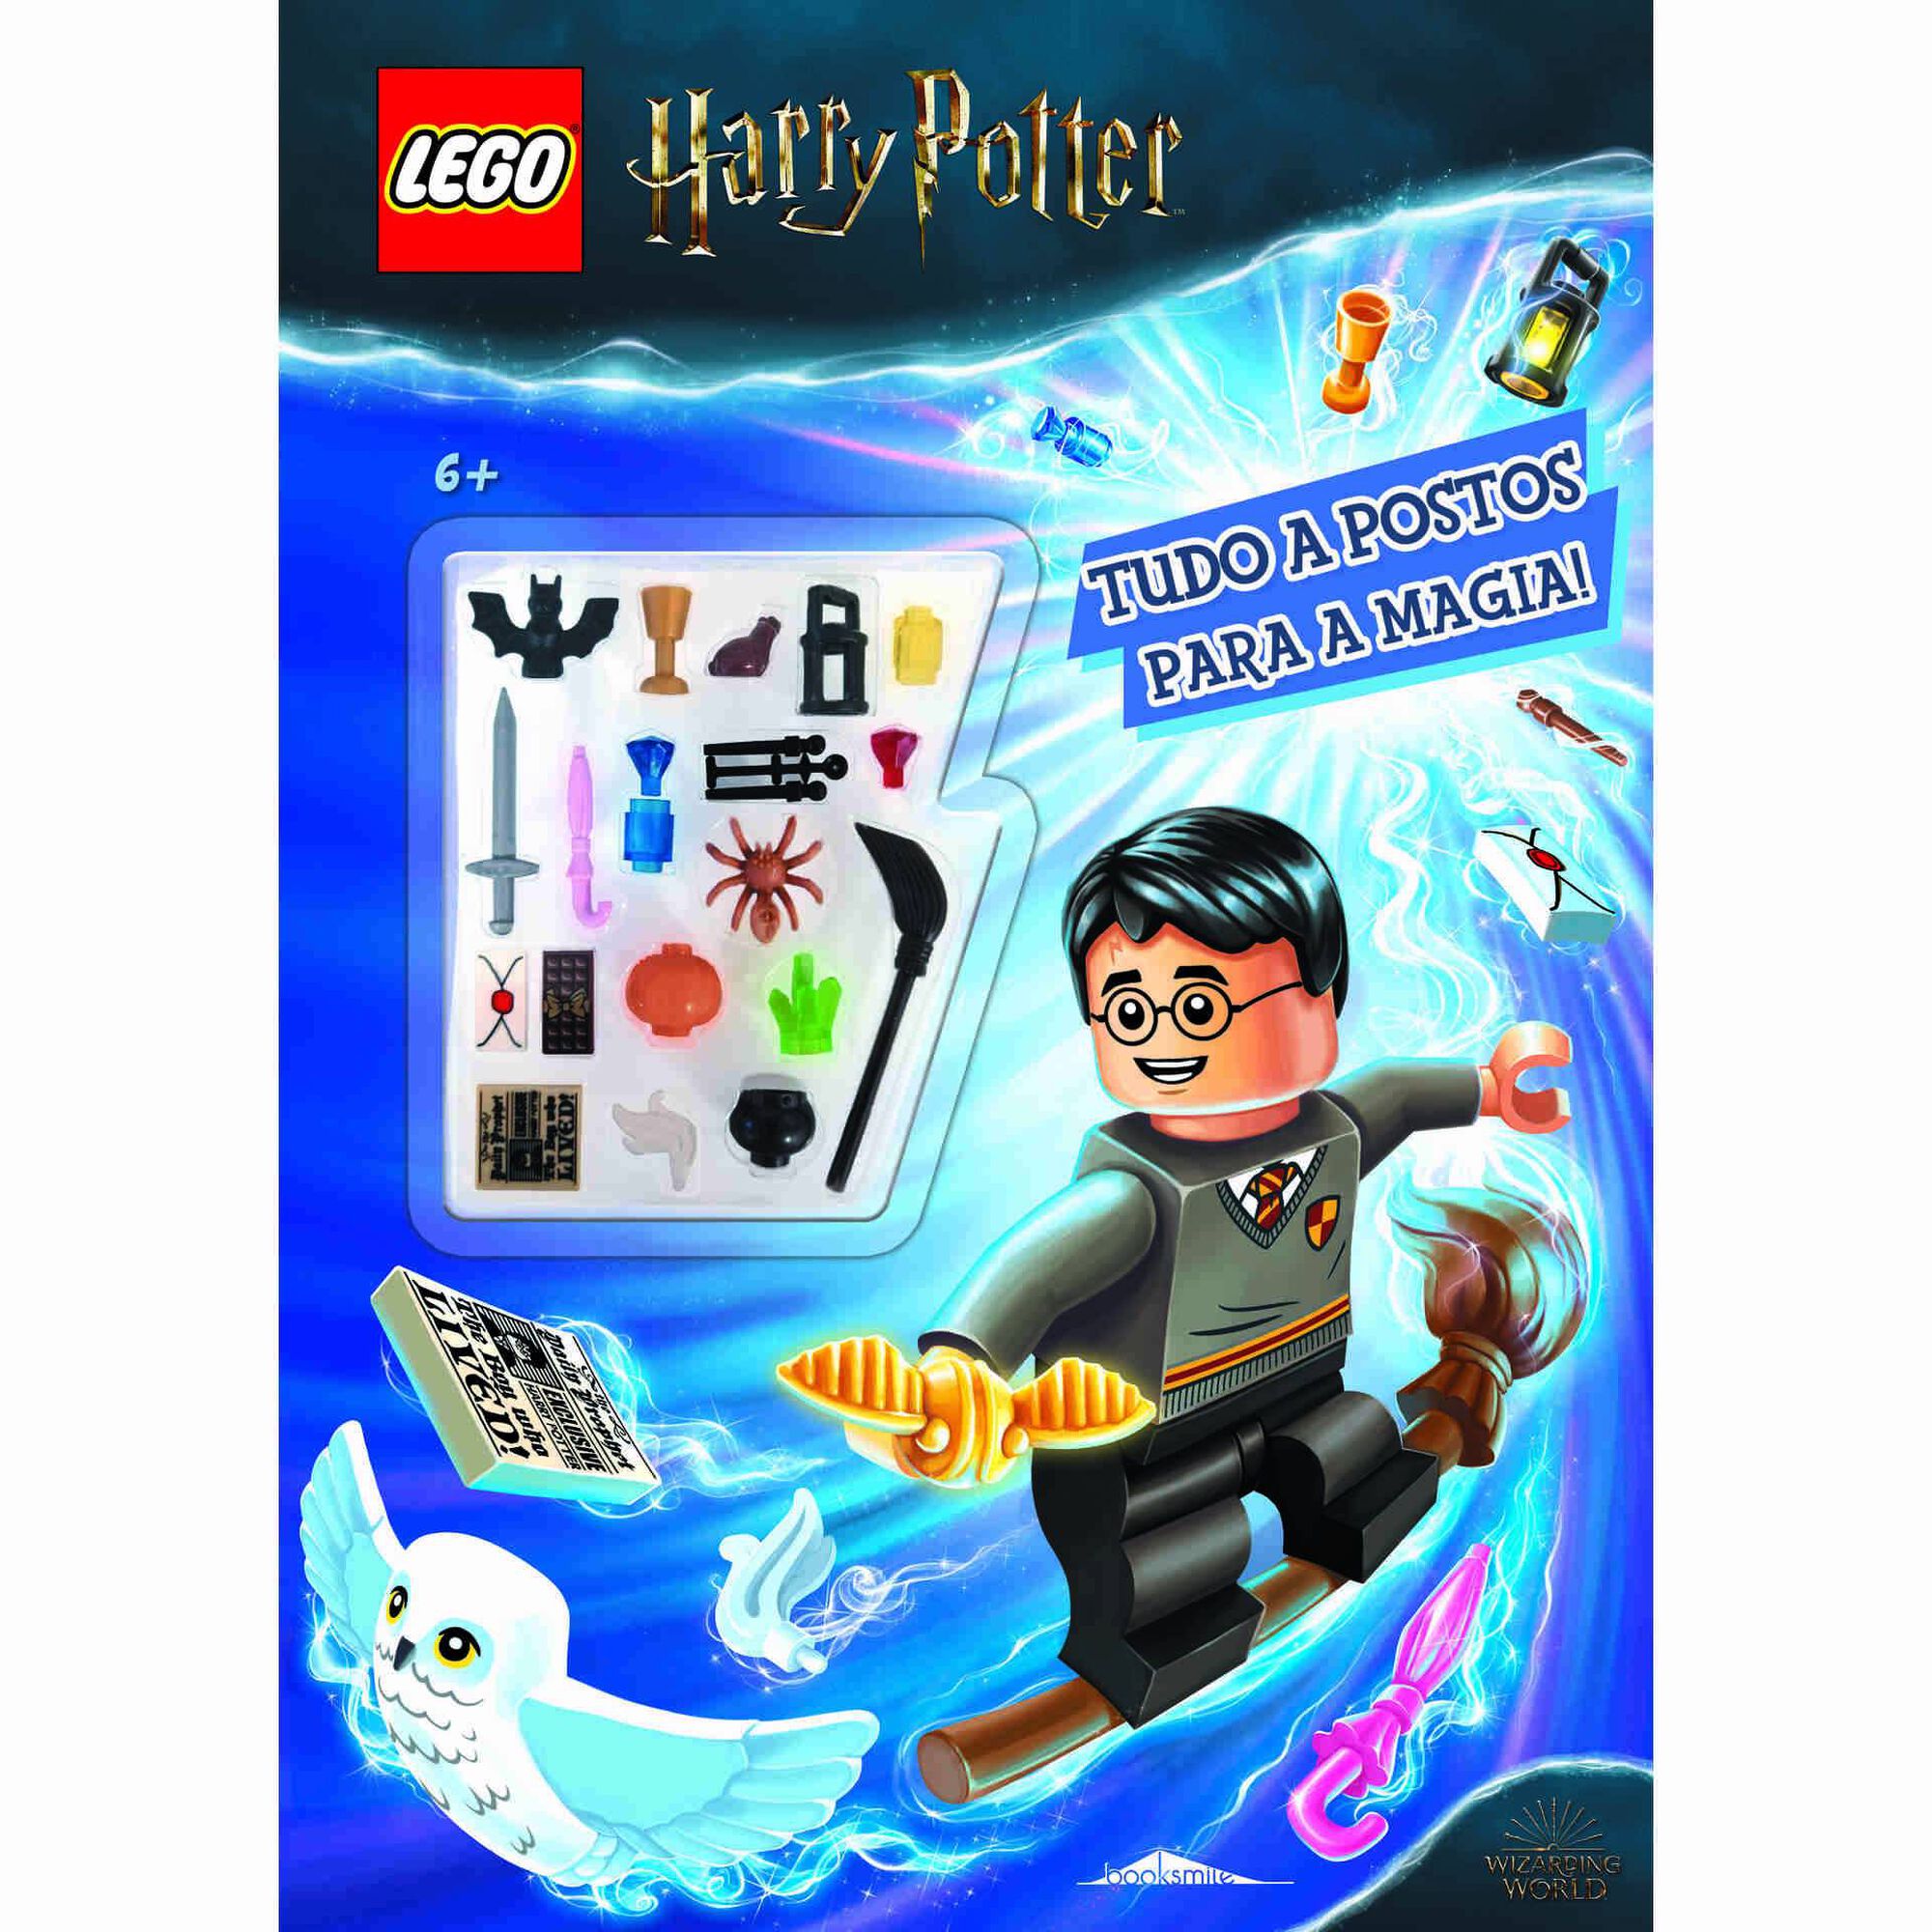 LEGO Harry Potter - Tudo a Postos Para a Magia!